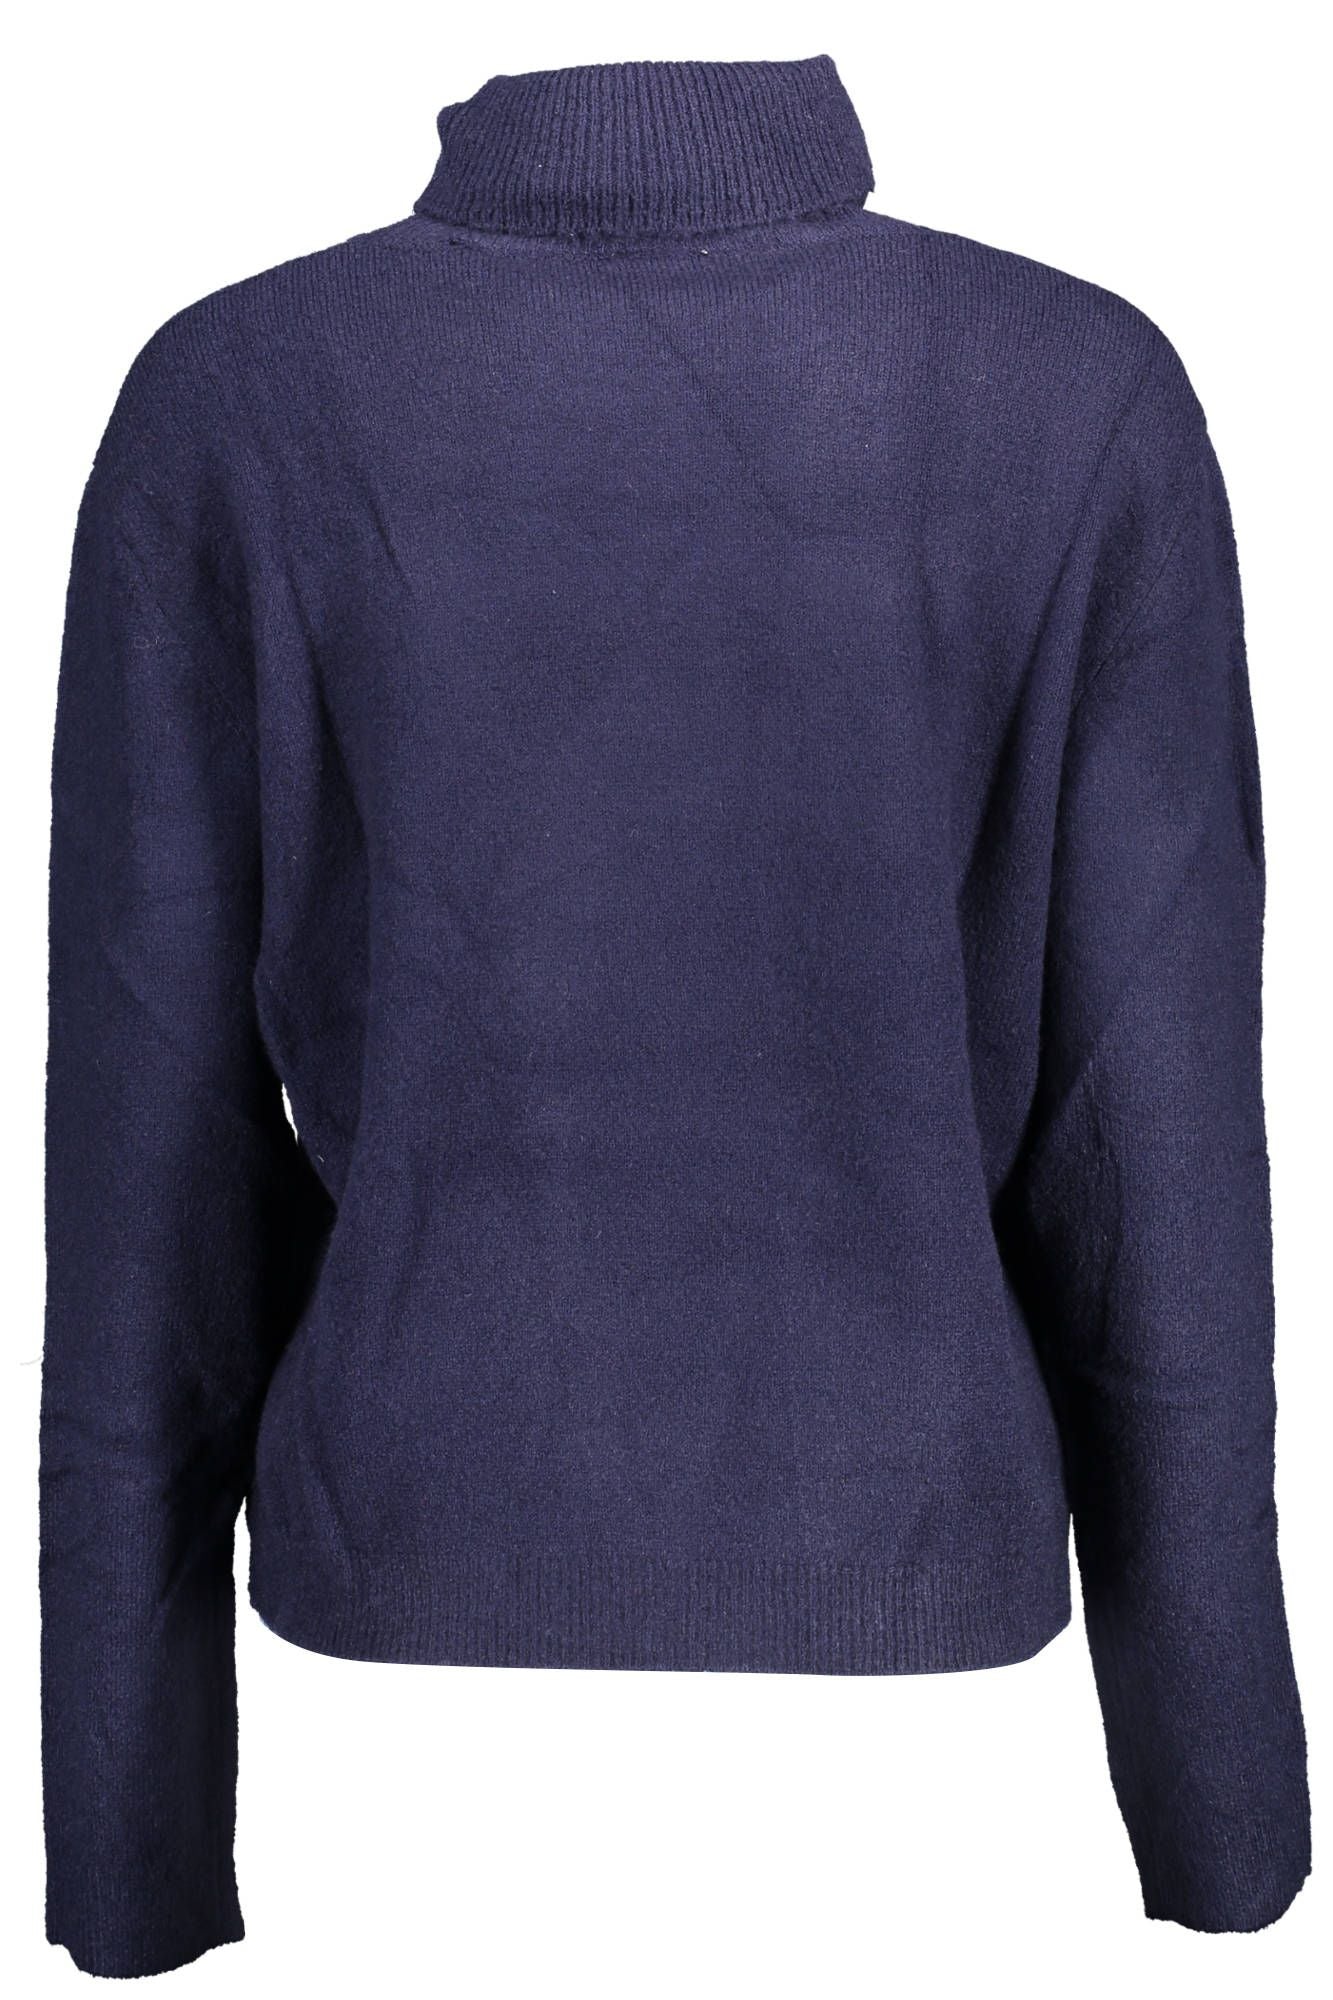 U.S. Polo Assn. Women's Blue Nylon Turtleneck Sweater